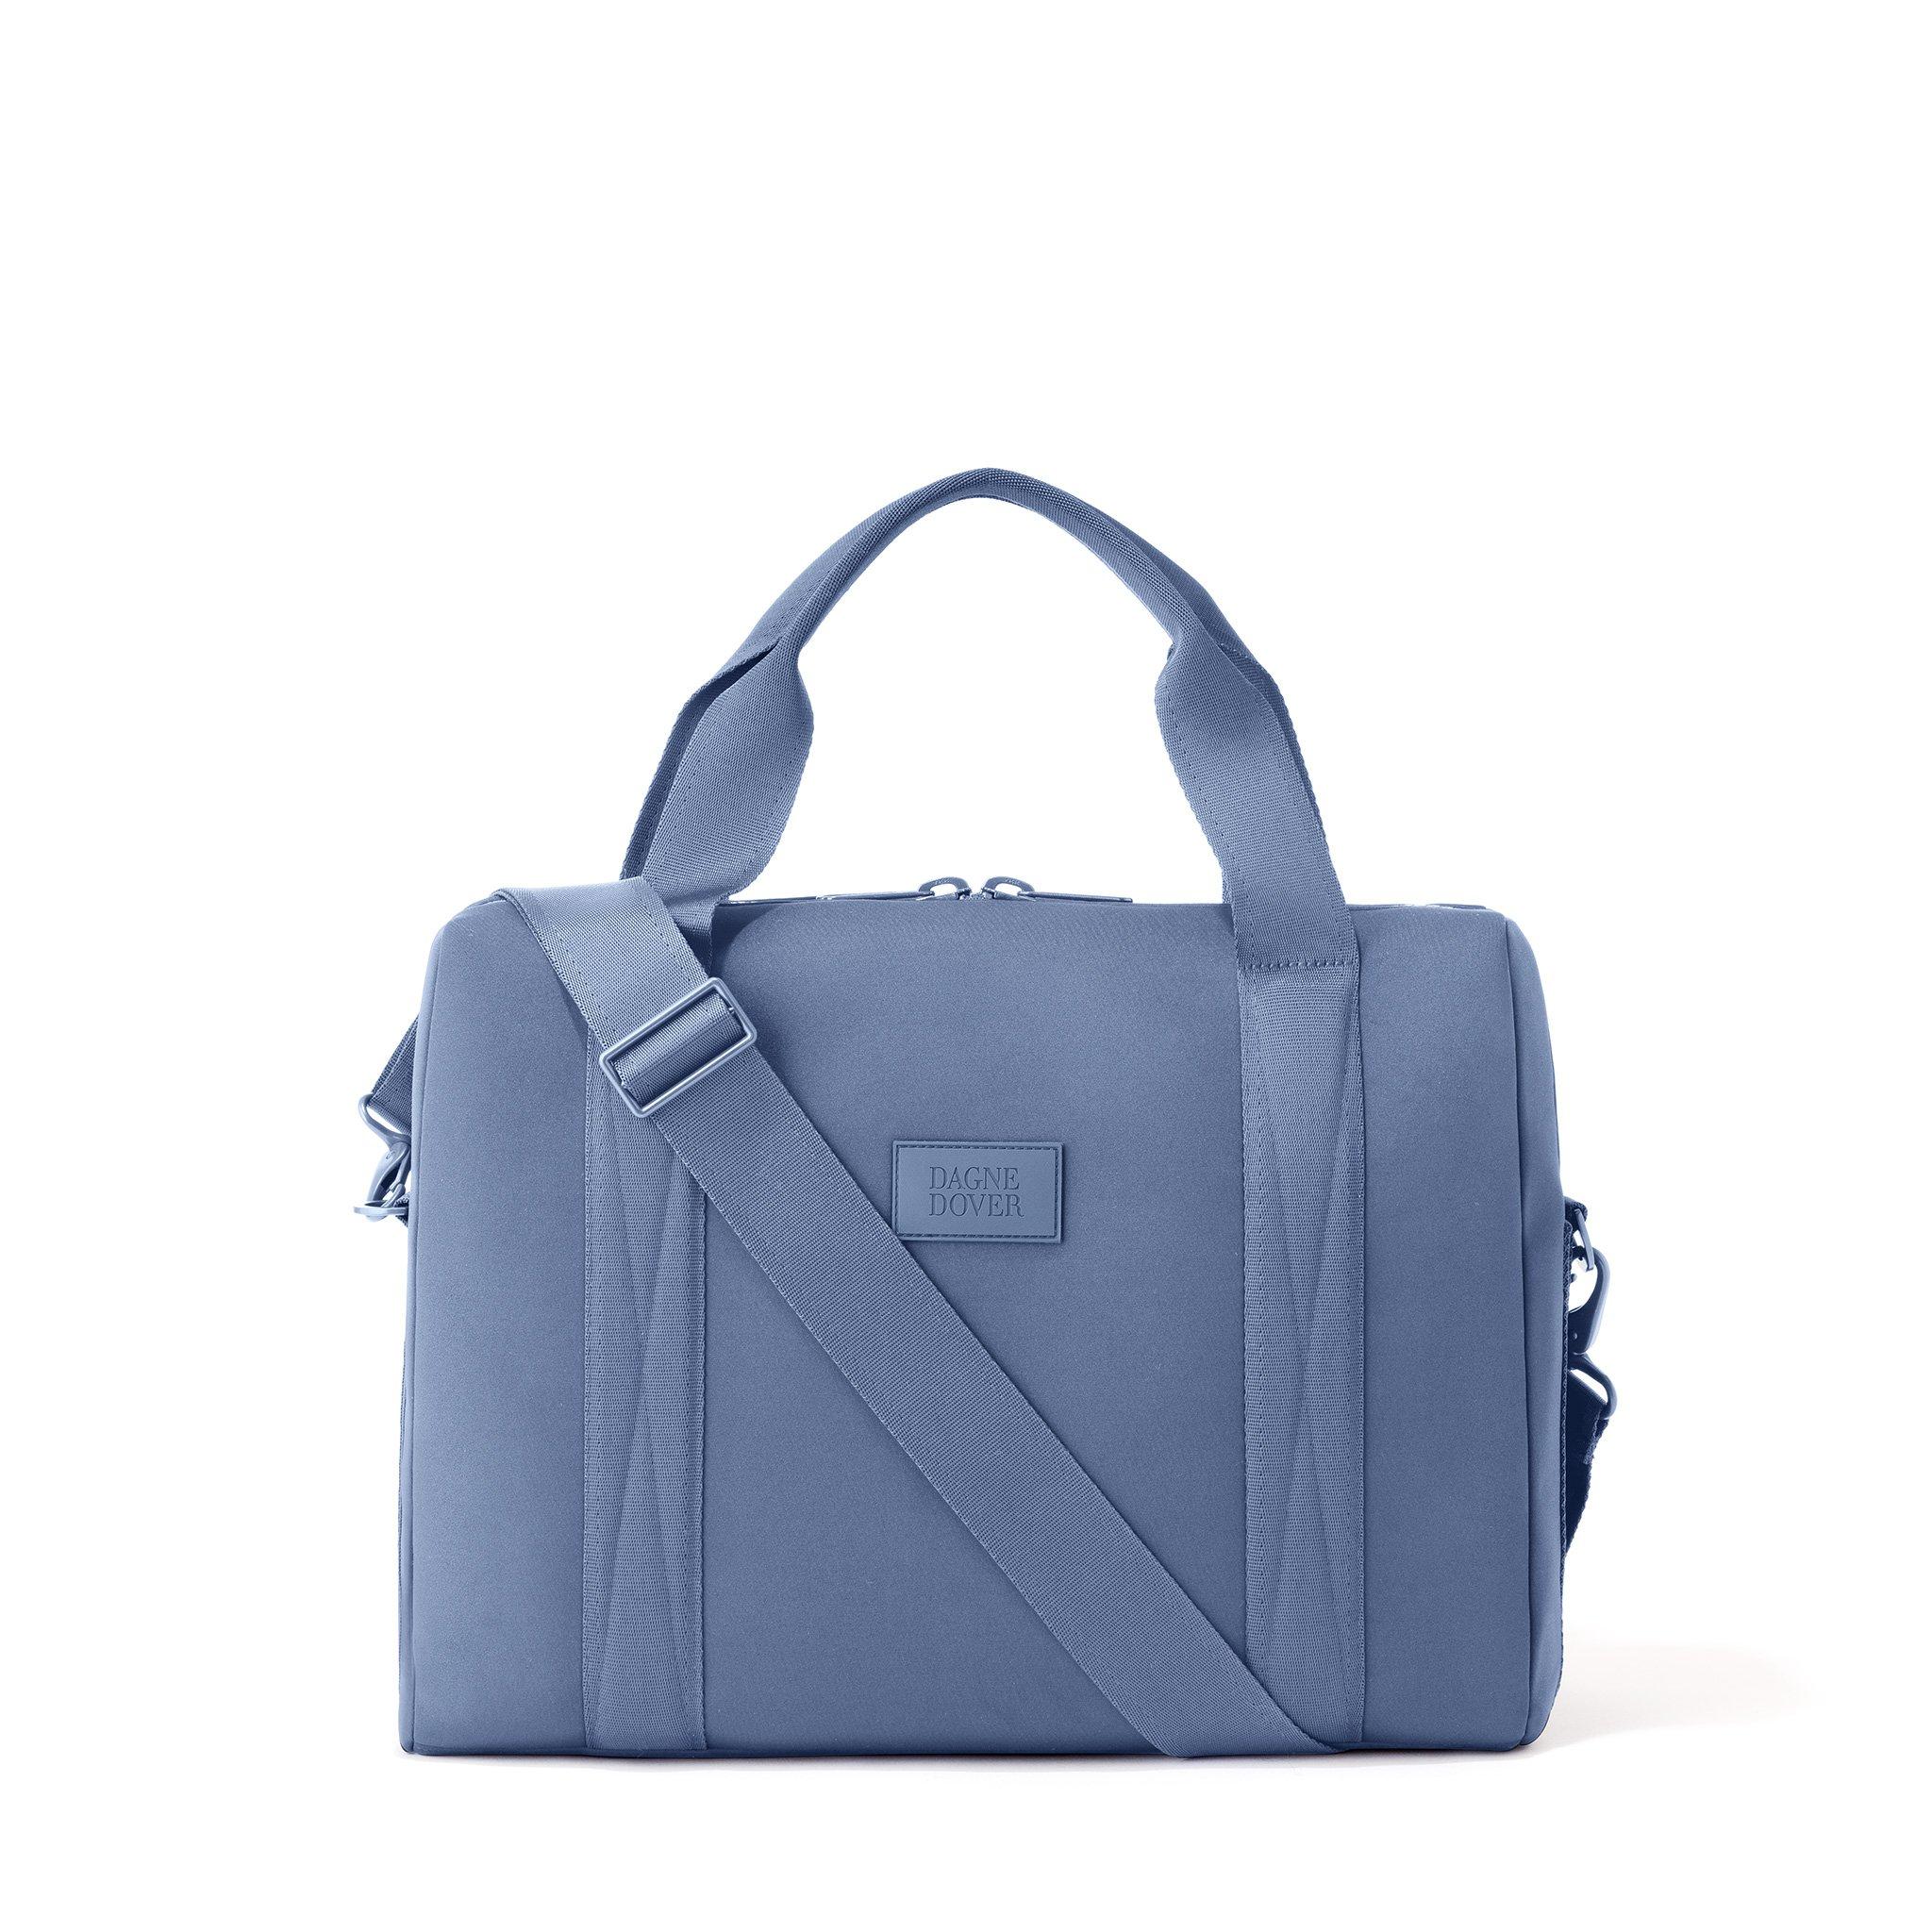 Dagne Dover Weston Laptop Bag In Ash Blue, Large - Lyst